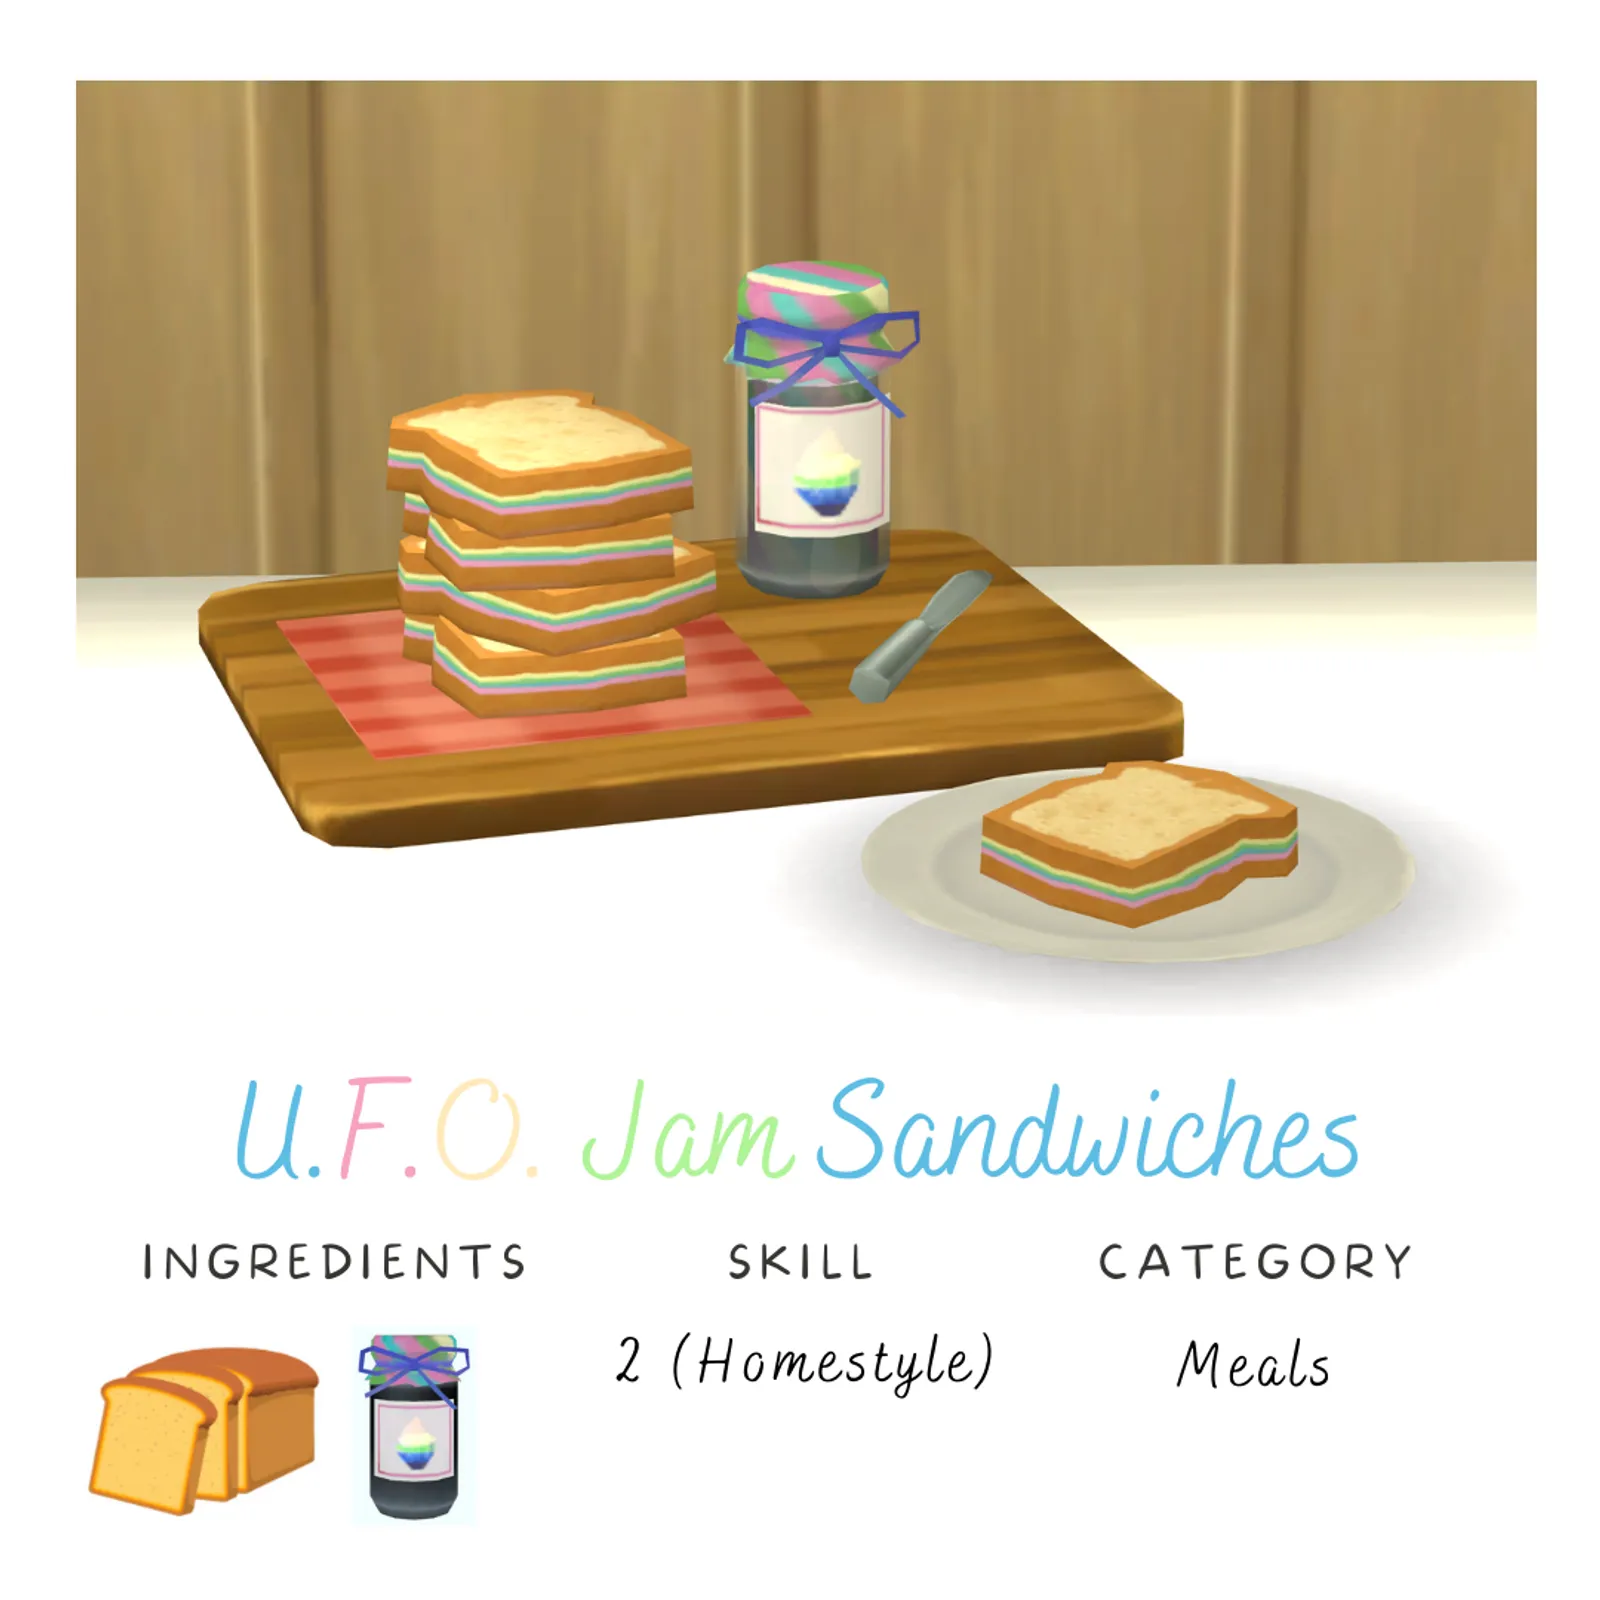 U.F.O. Jam Sandwiches